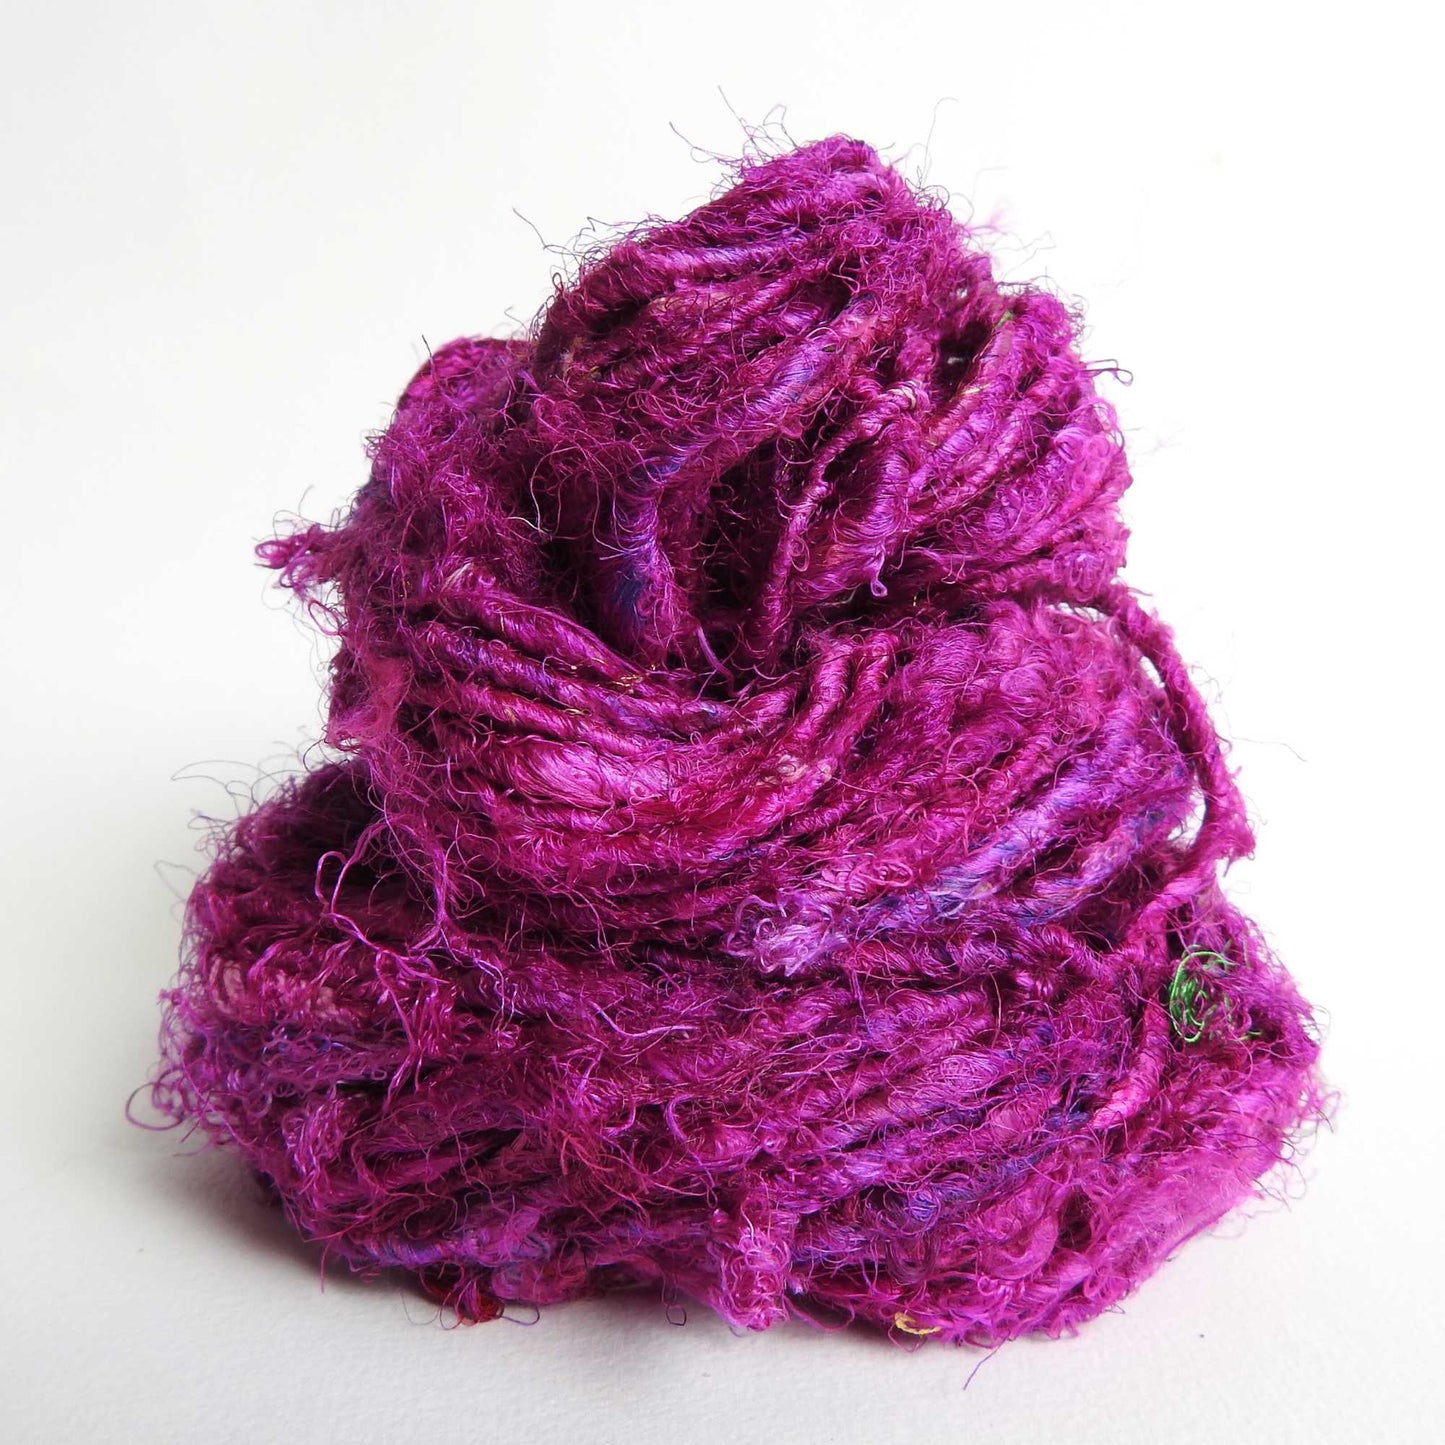 
                  
                    Ball of Sari Silk Yarn in Magenta. Recycled sari silk yarn Australia. Eco friendly yarn. Handspun, chunky yarn for knitting, crochet, weaving, craft.
                  
                